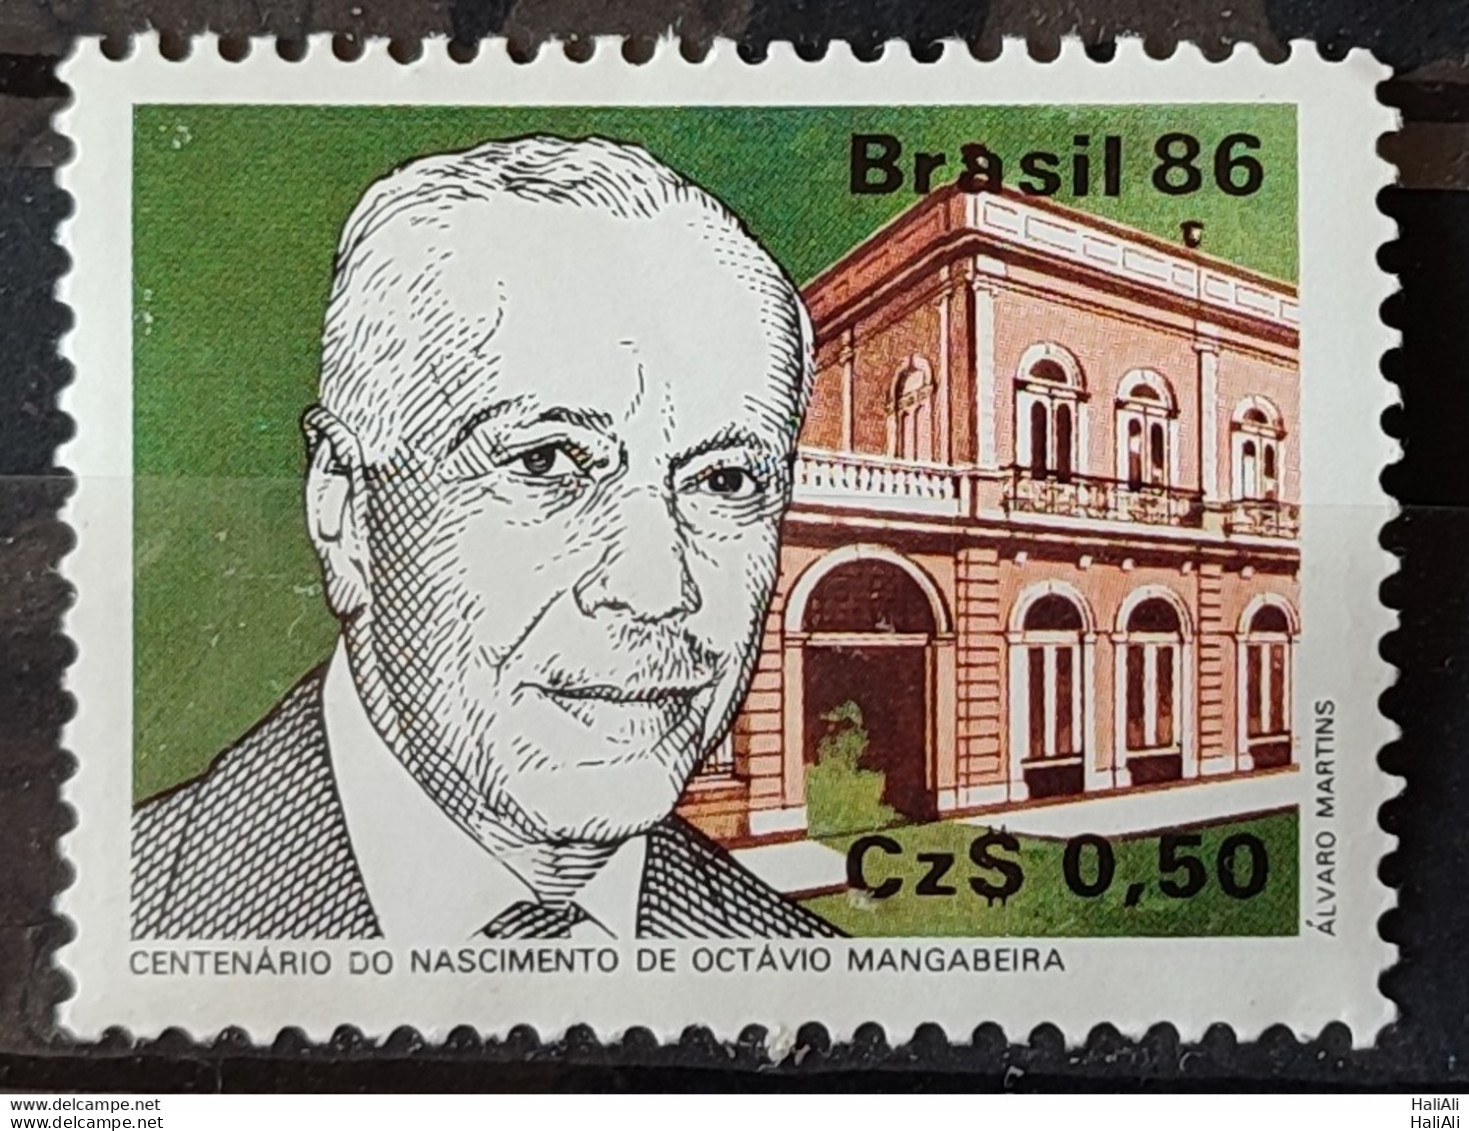 C 1519 Brazil Stamp Octavio Mangabeira Politics 1986.jpg - Unused Stamps